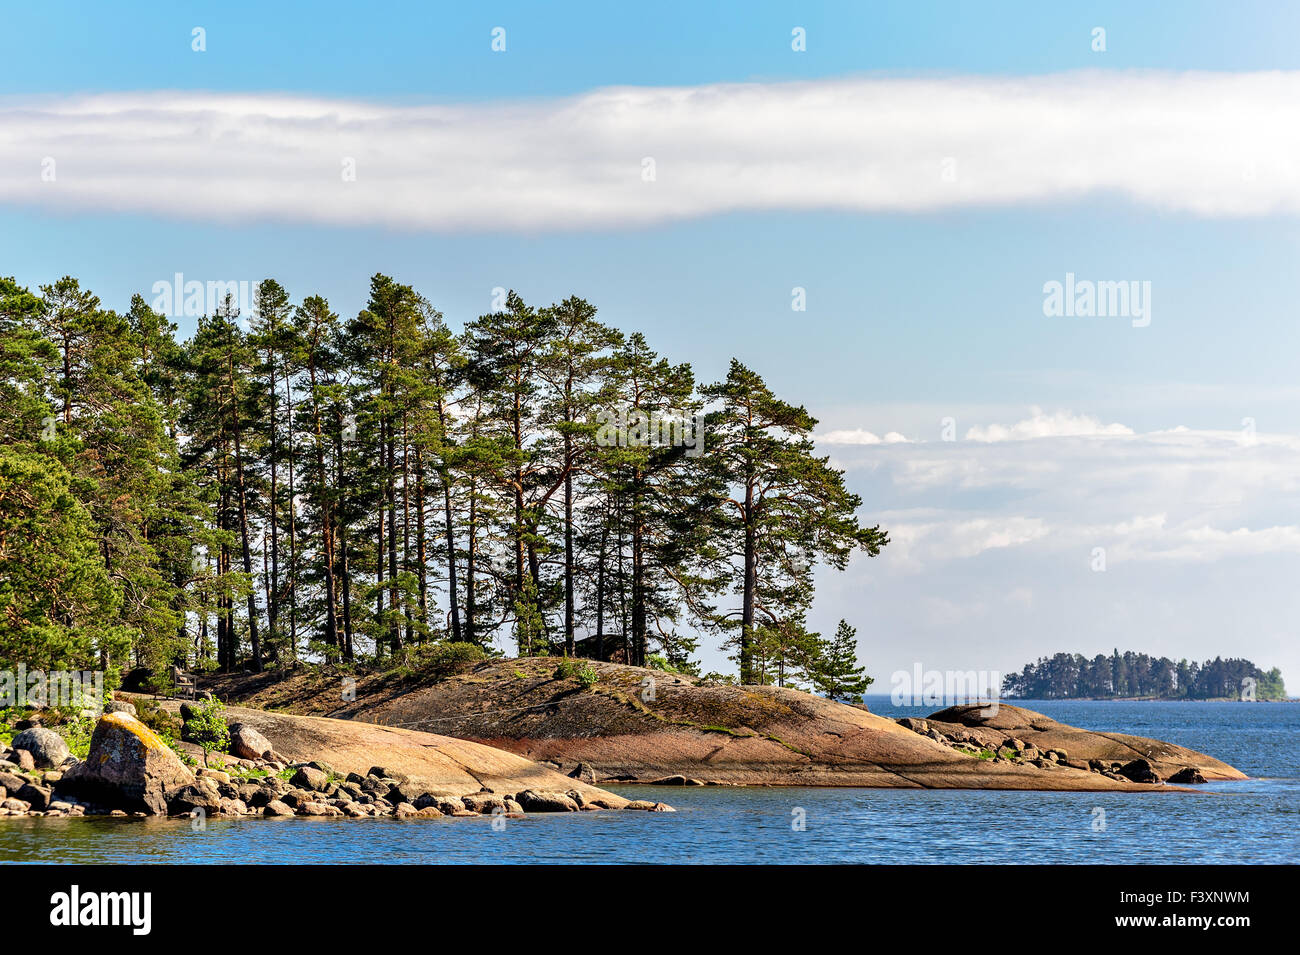 Islands in finland gulf Stock Photo